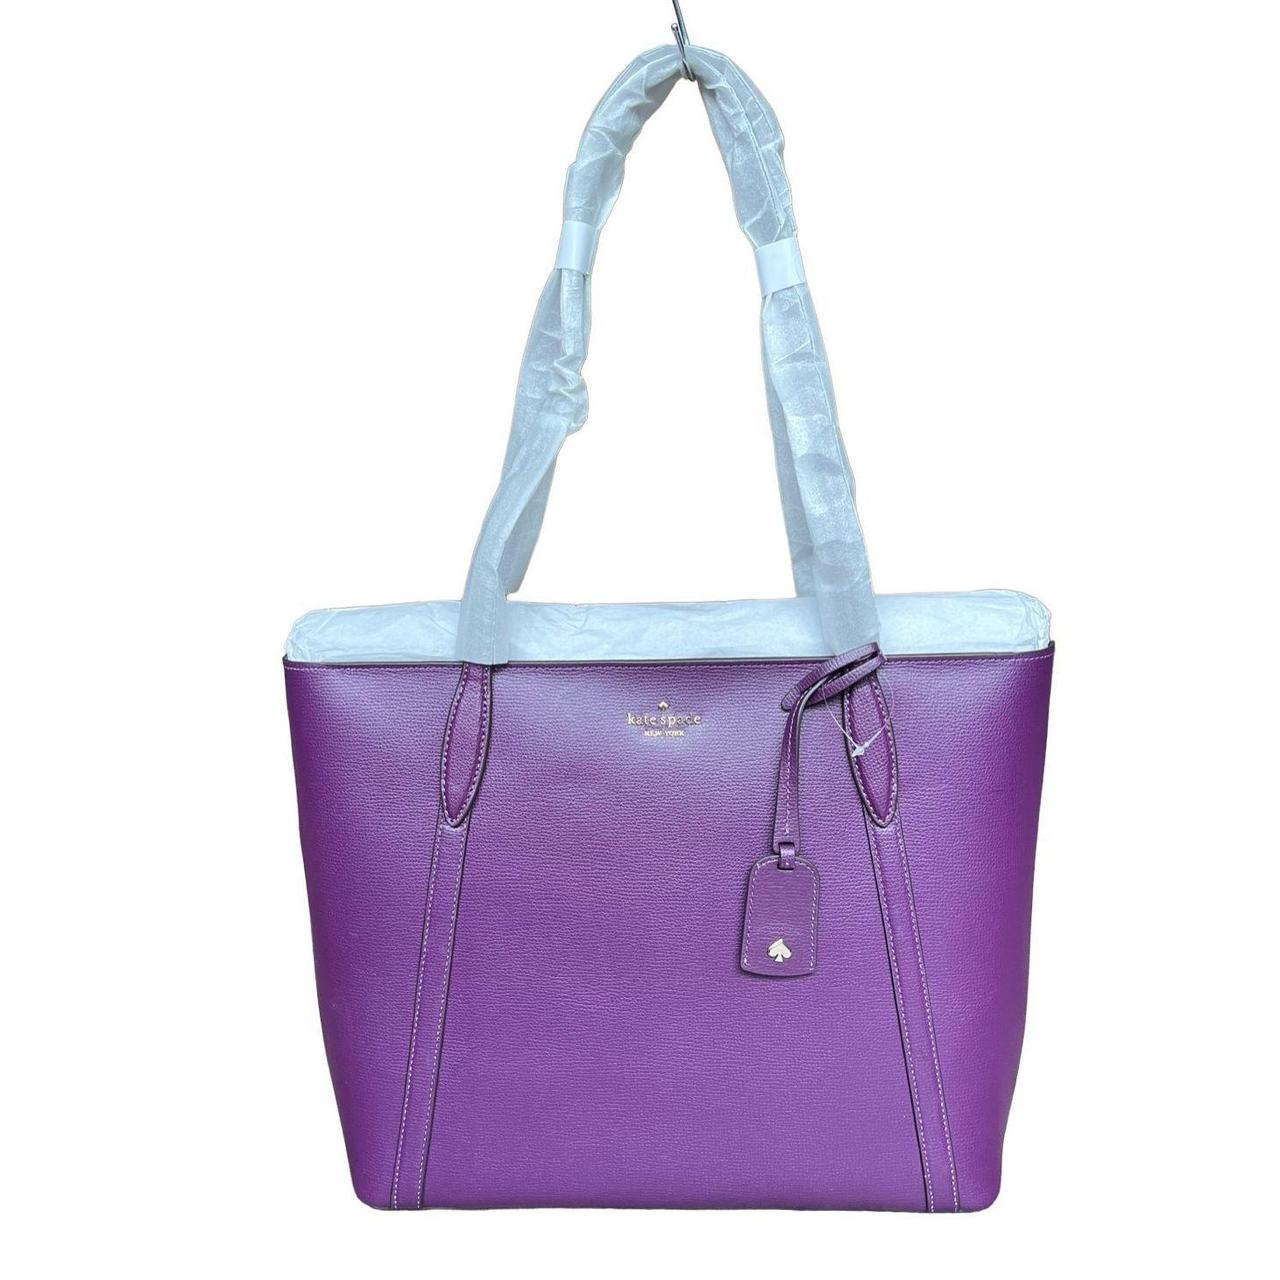 Purple Nanette Lepore bag, never used - Depop